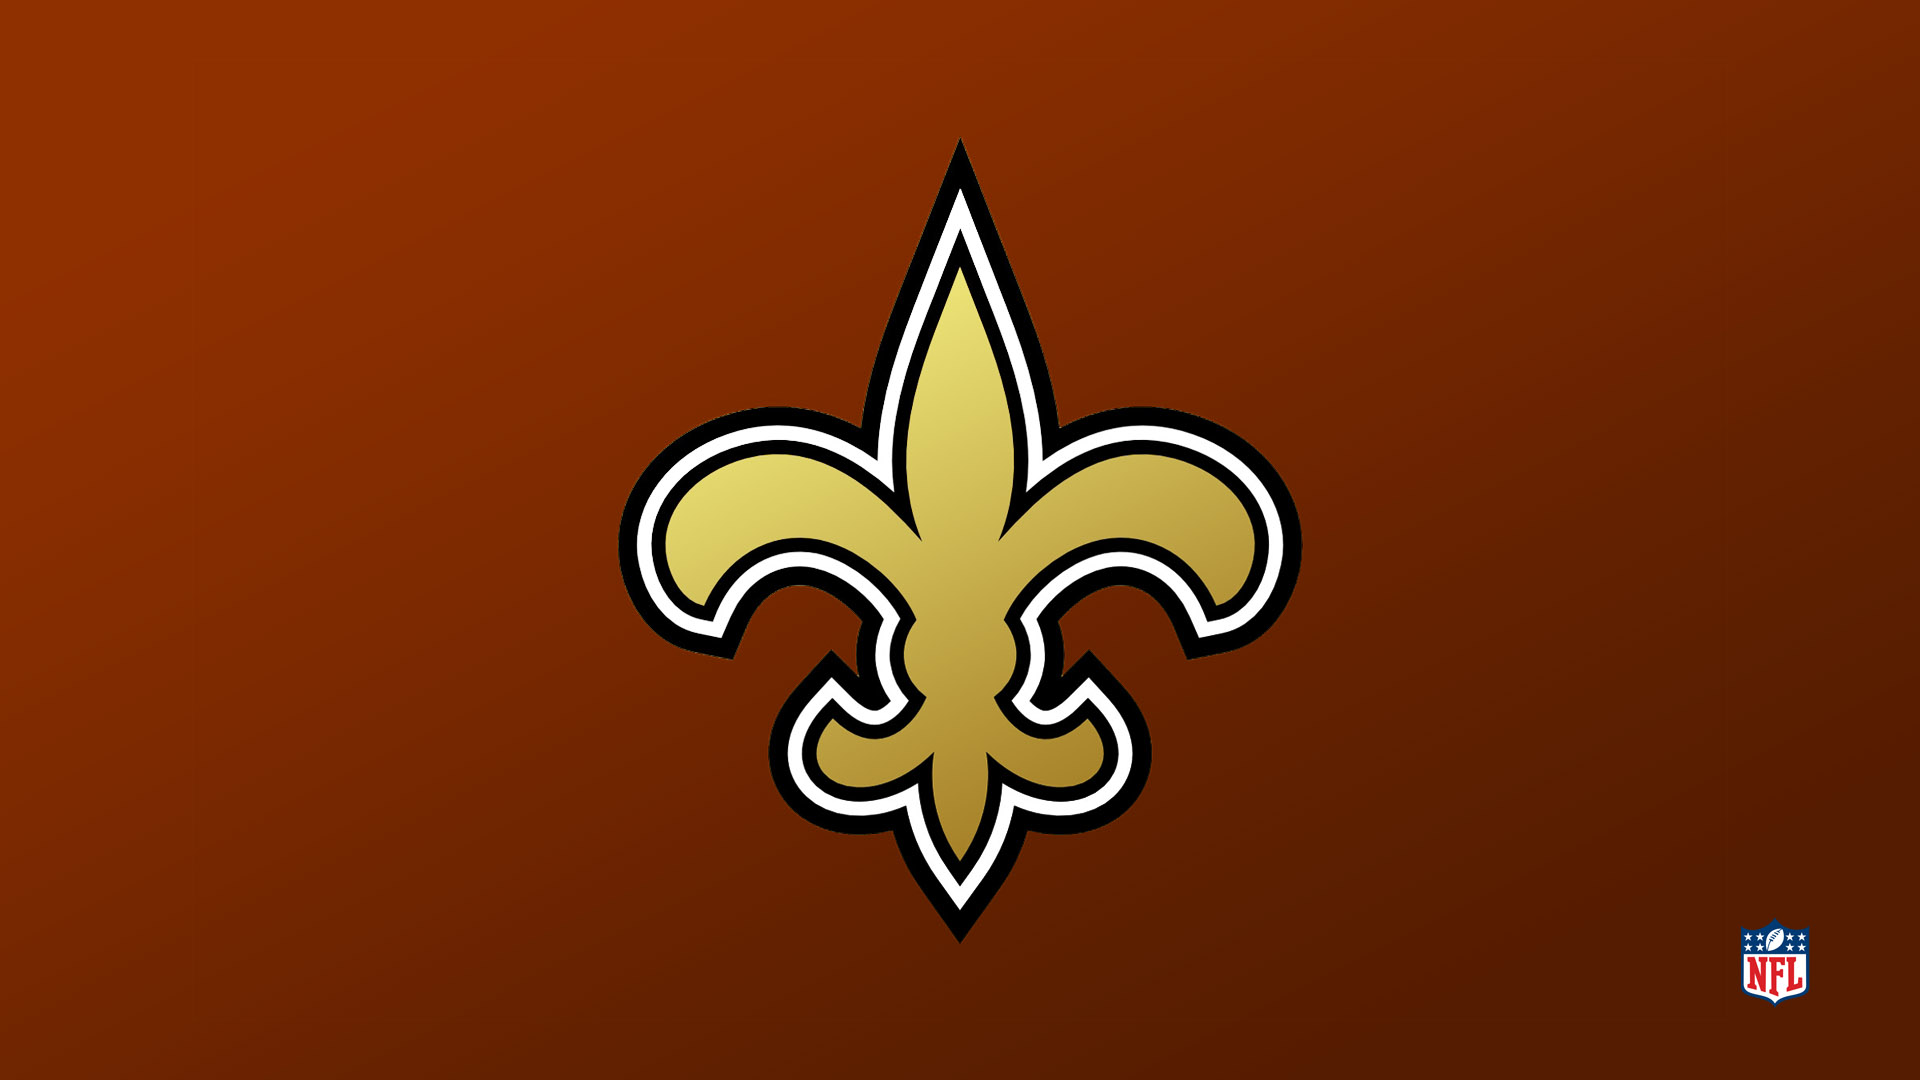 New Orleans Saints HD Image Sports Nfl Football